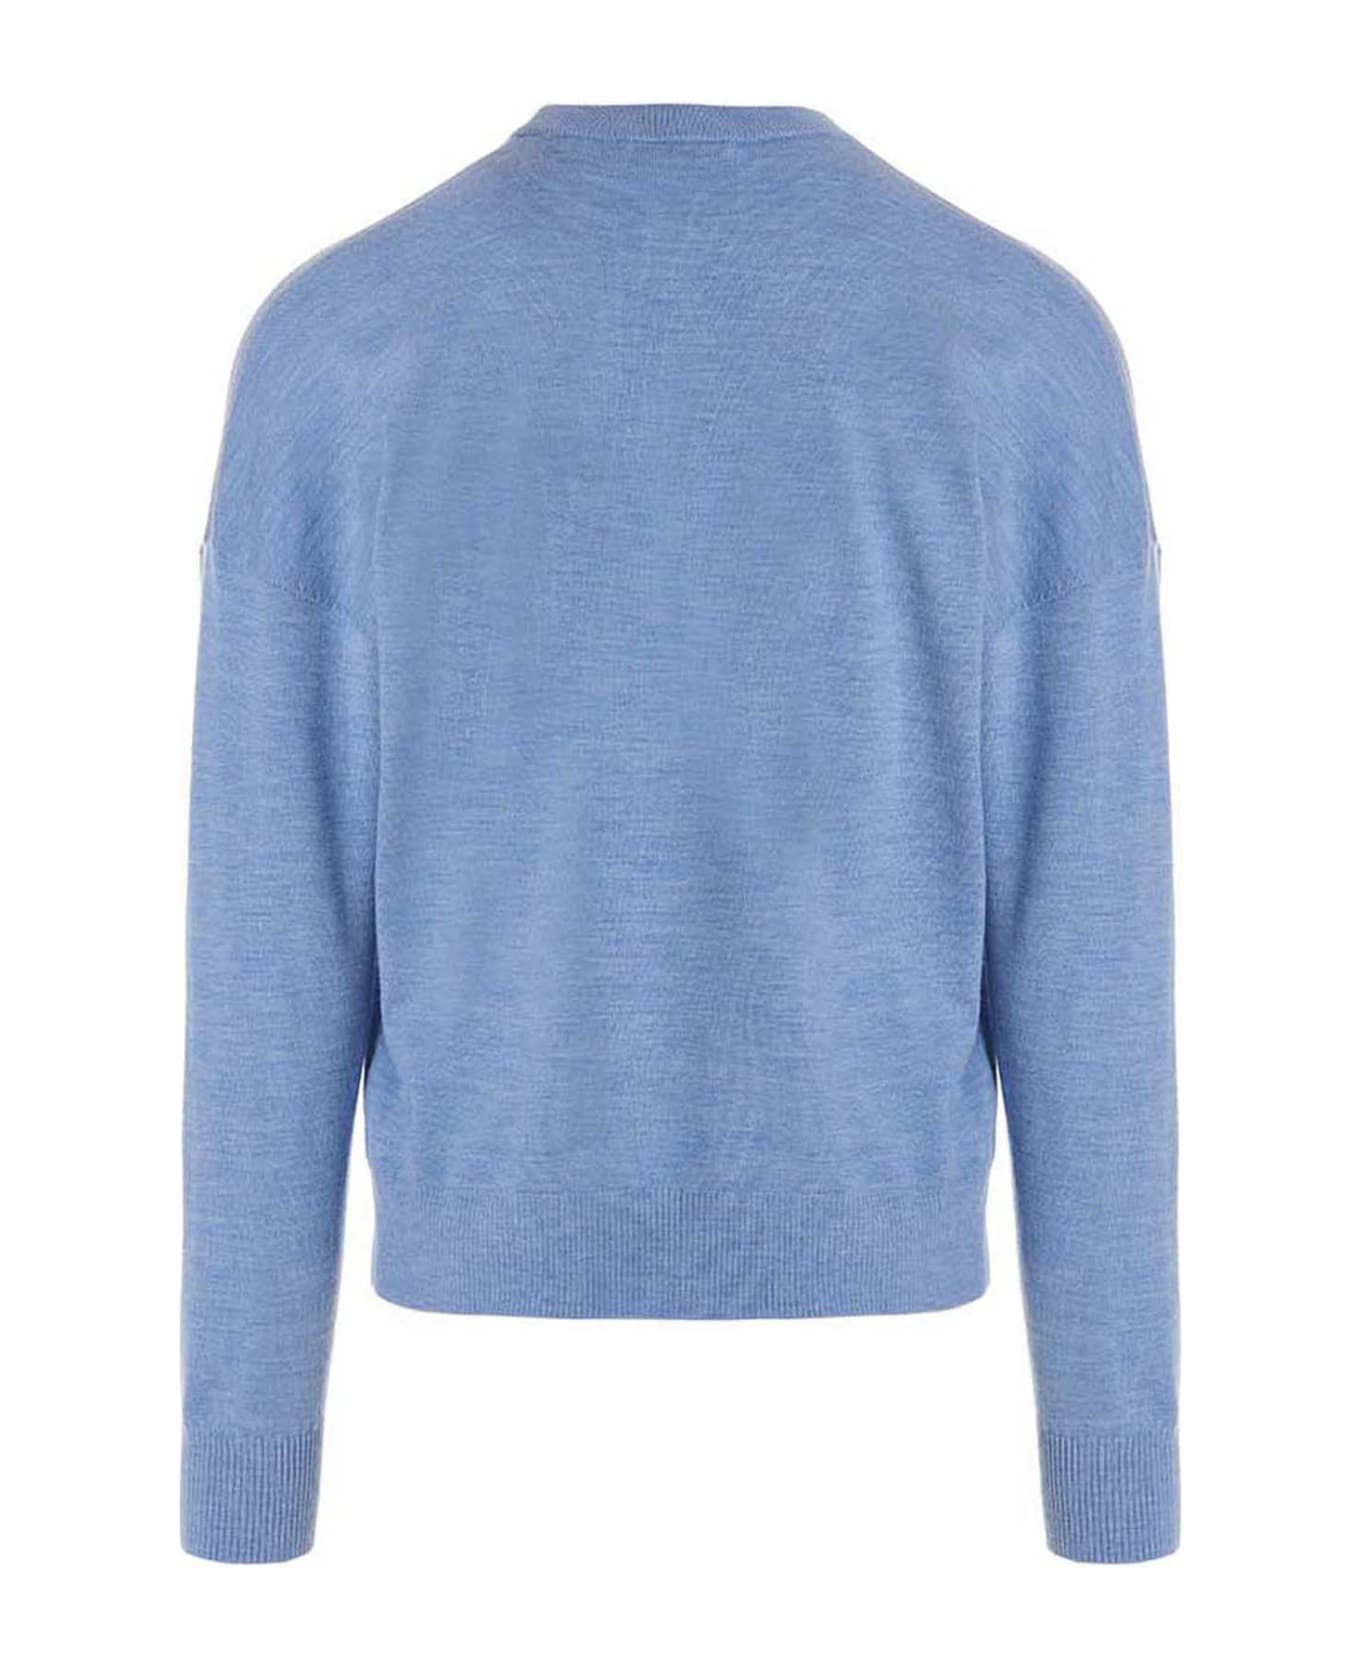 J.W. Anderson 'jwa' Sweater - Light Blue